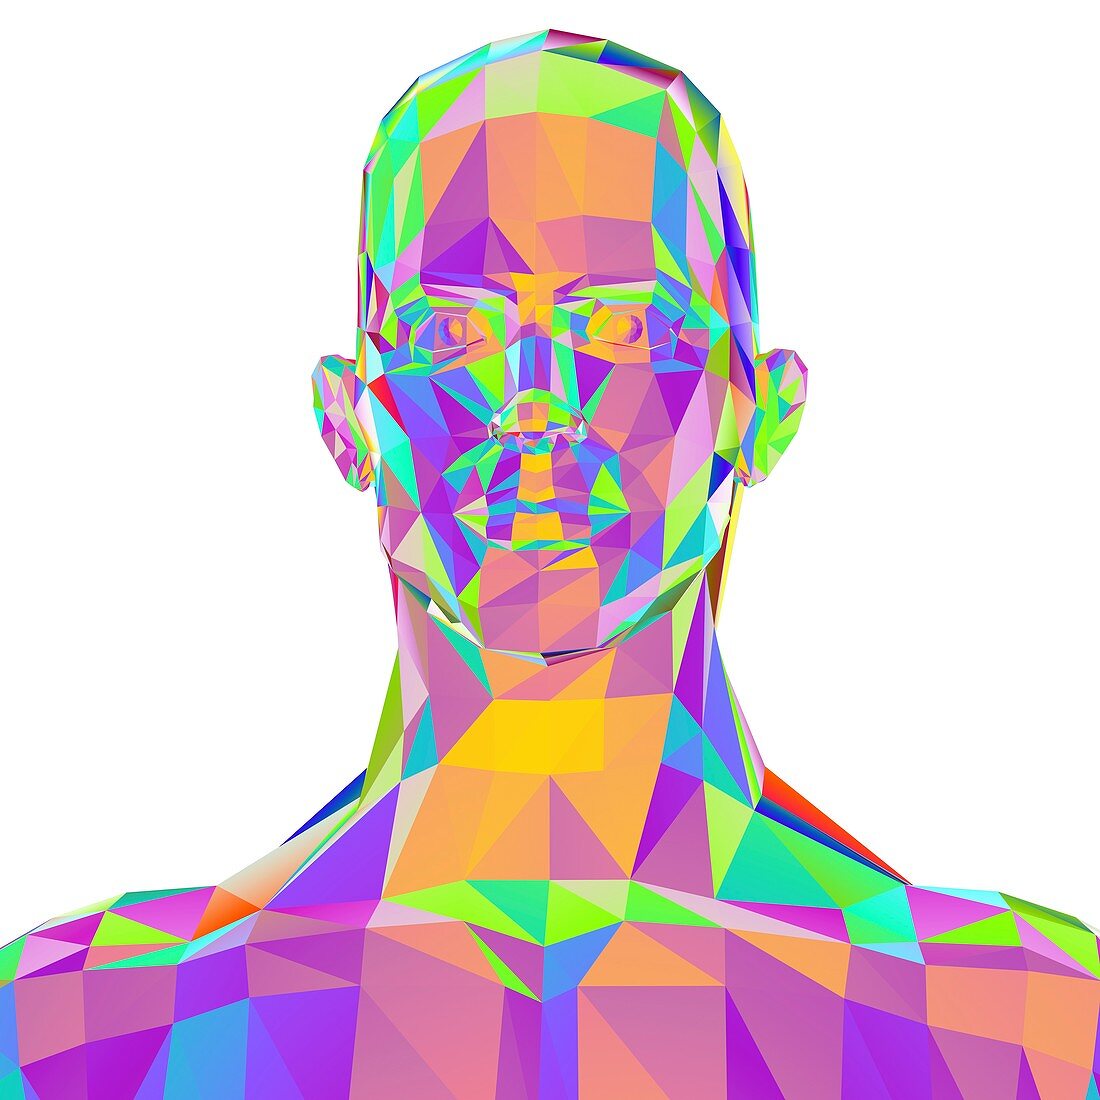 Geometric abstract polygonal male head